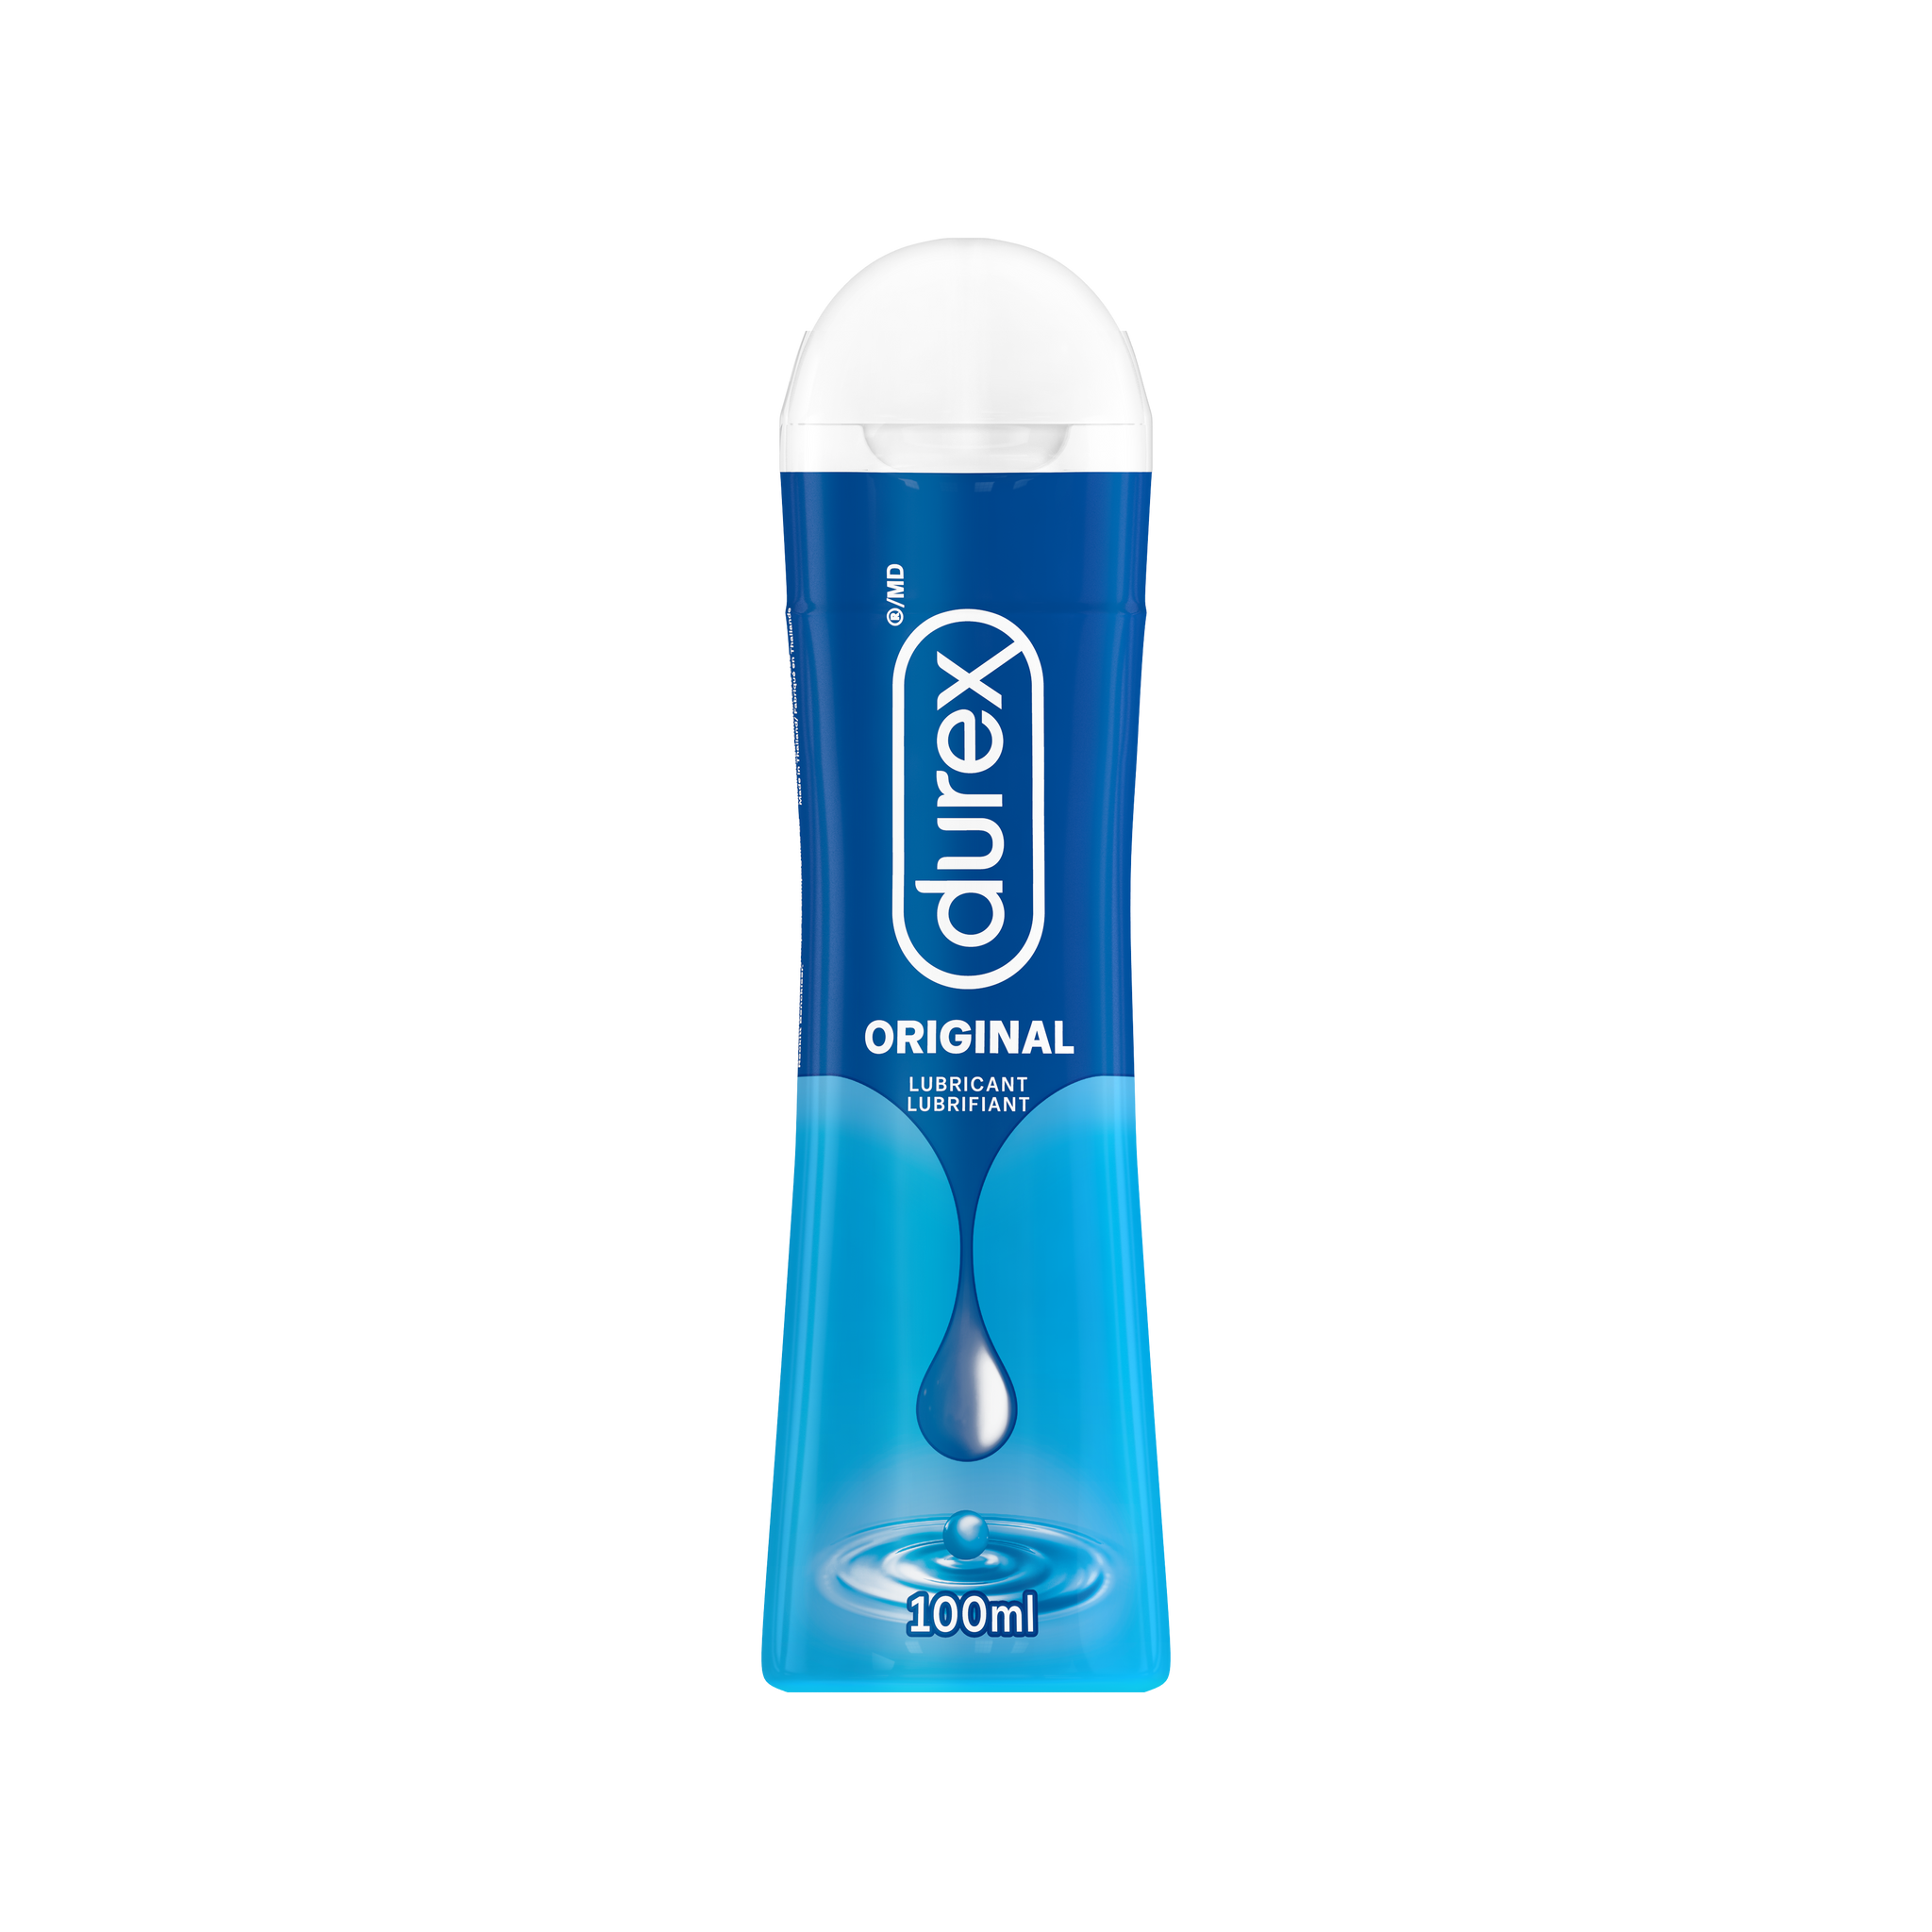 packshot of Durex Original gel in a 100 ml bottle